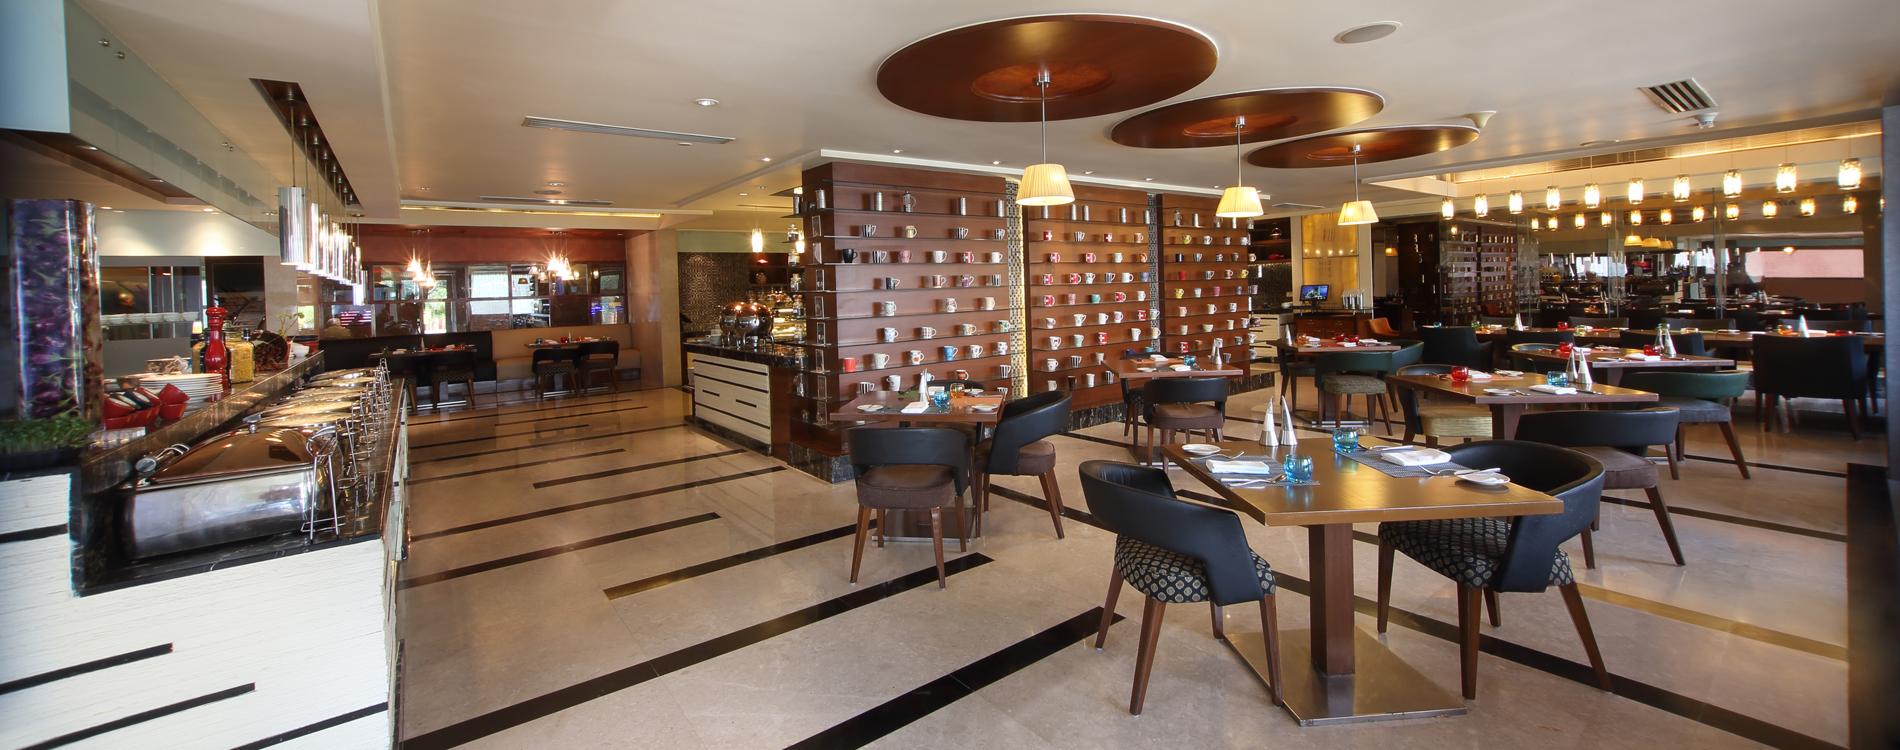 UG Regal | Budget Hotels in Bangalore near railway station – Google hotels